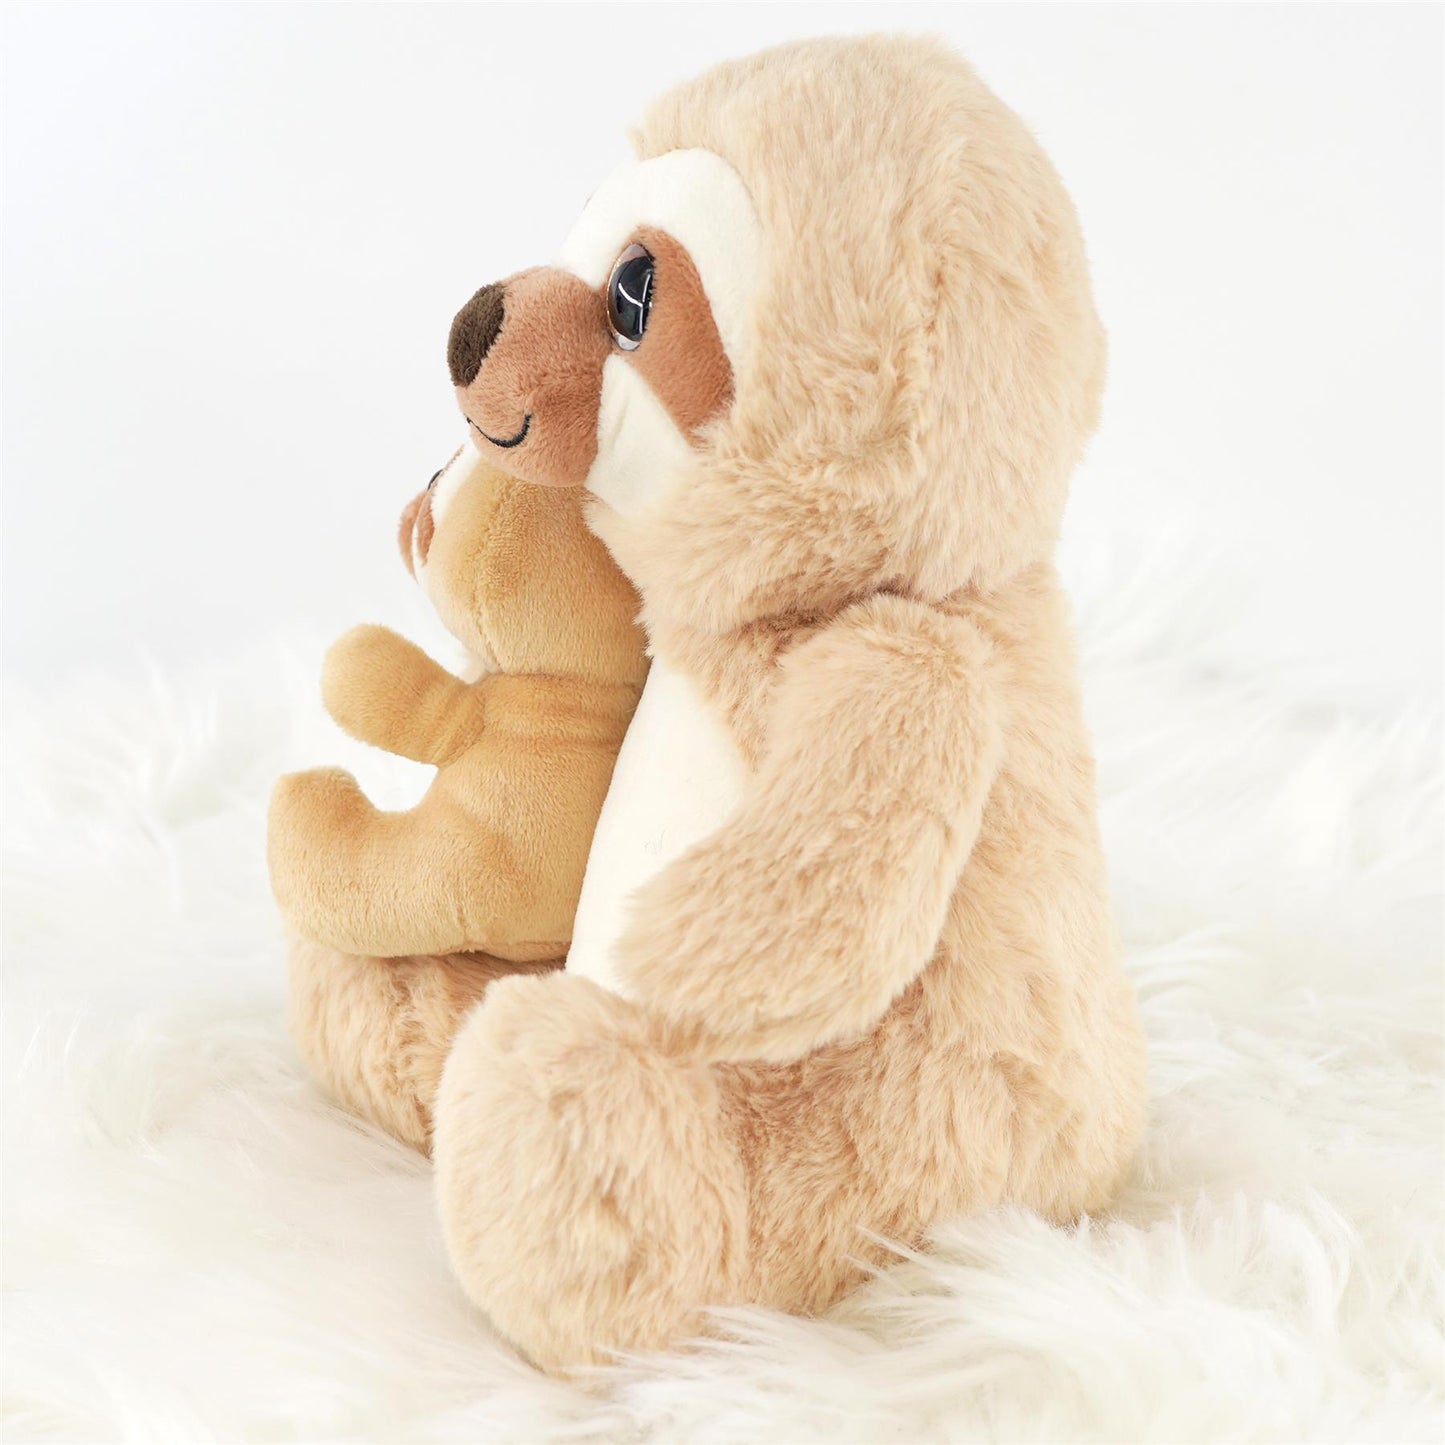 Mum and Baby Sloth Plush Toys by The Magic Toy Shop - UKBuyZone